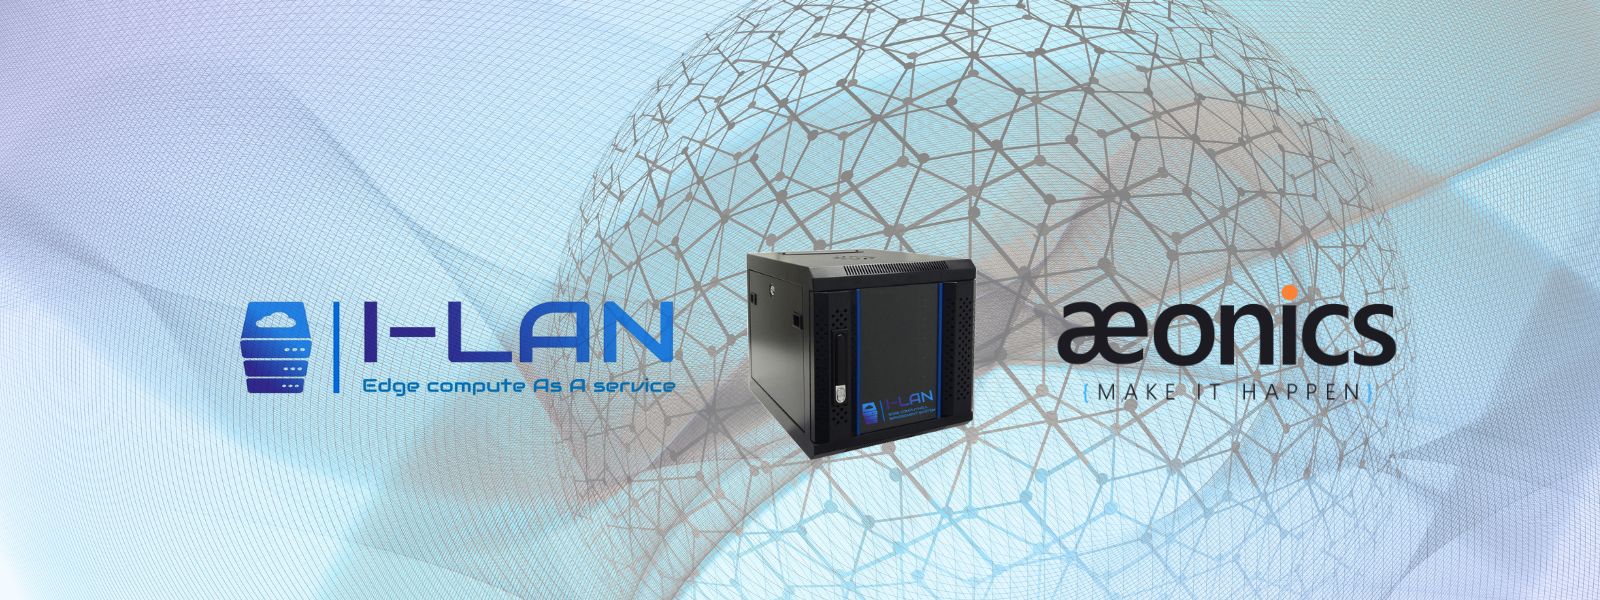 Aeonics - i-Lan partnership